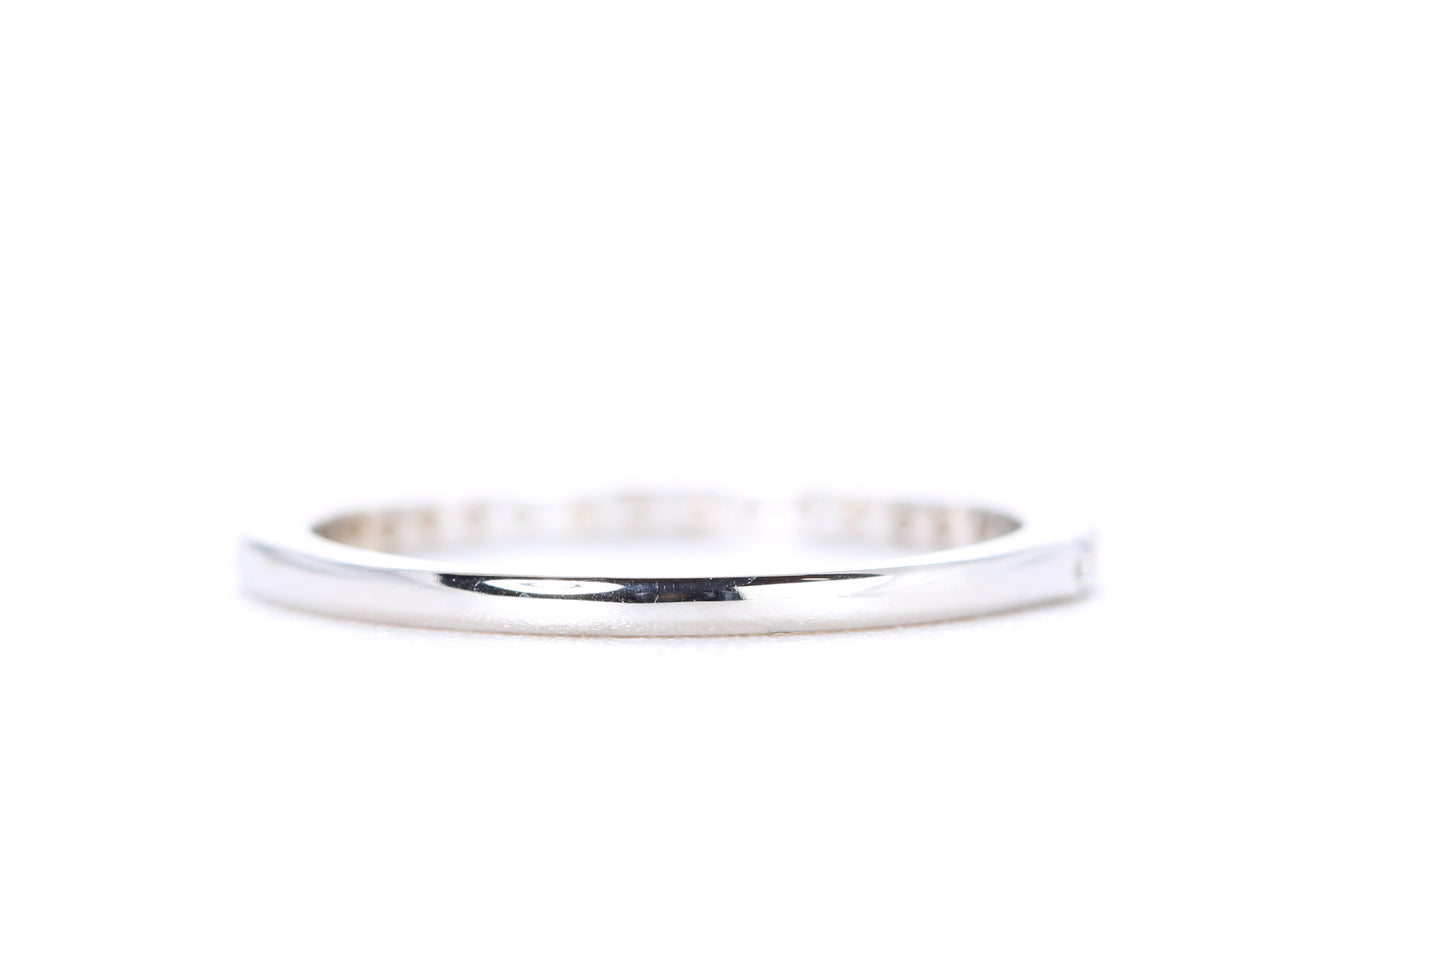 Micro Pavé Diamond Ring 1/4 Carat in White Gold